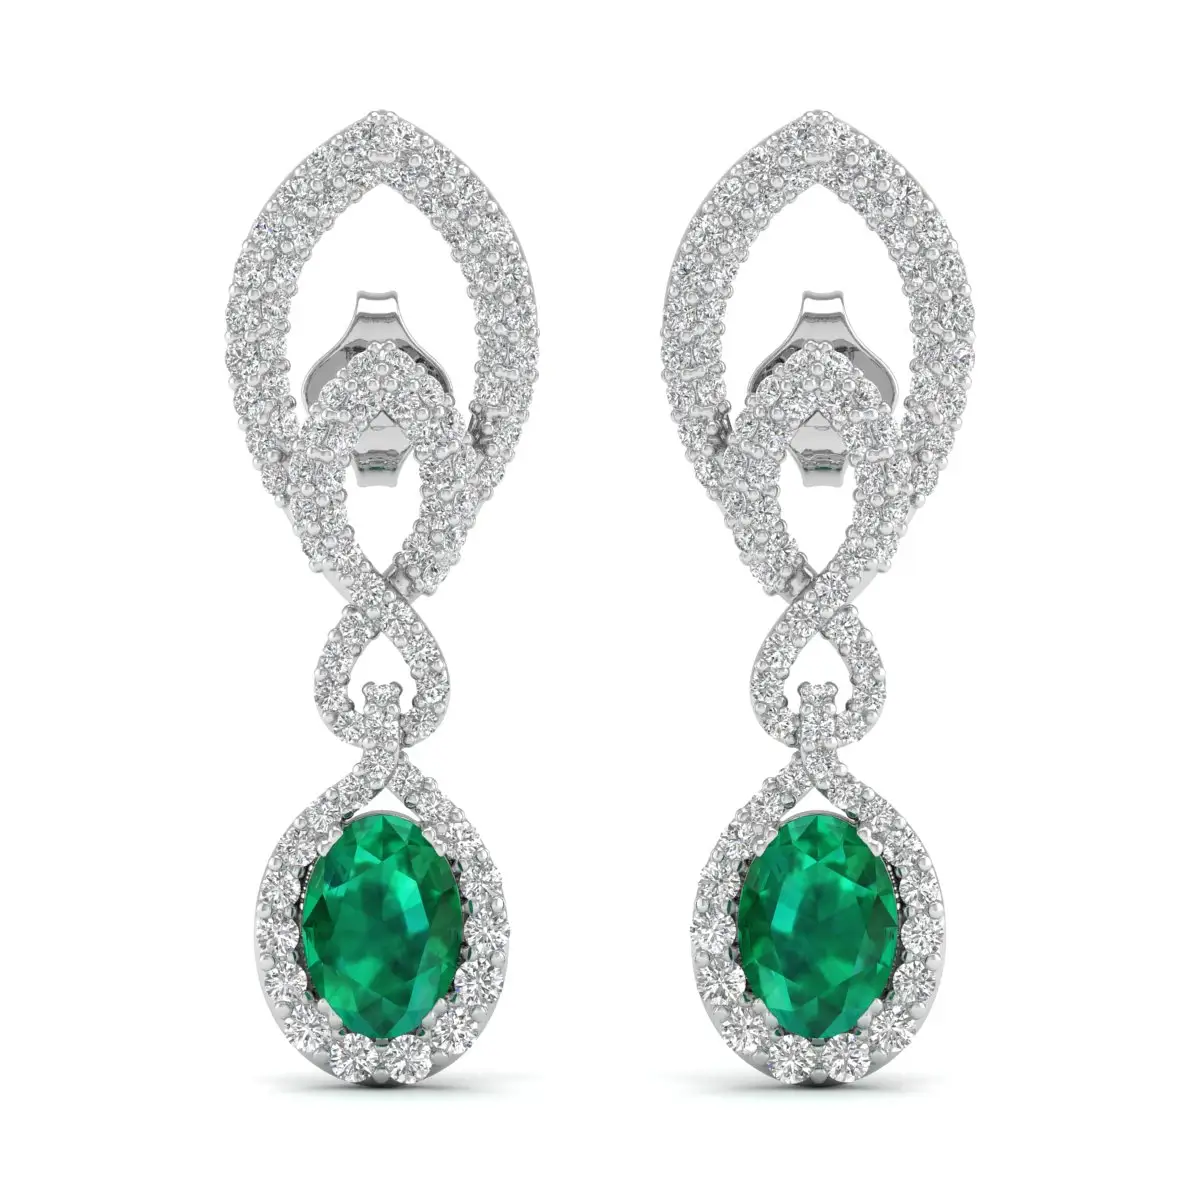 REYES Luxury Elegance Premium Quality 14K Gold Diamond Drop Earrings Graceful Oval Cut 2.3 Carat Emerald Gemstone Jewelry